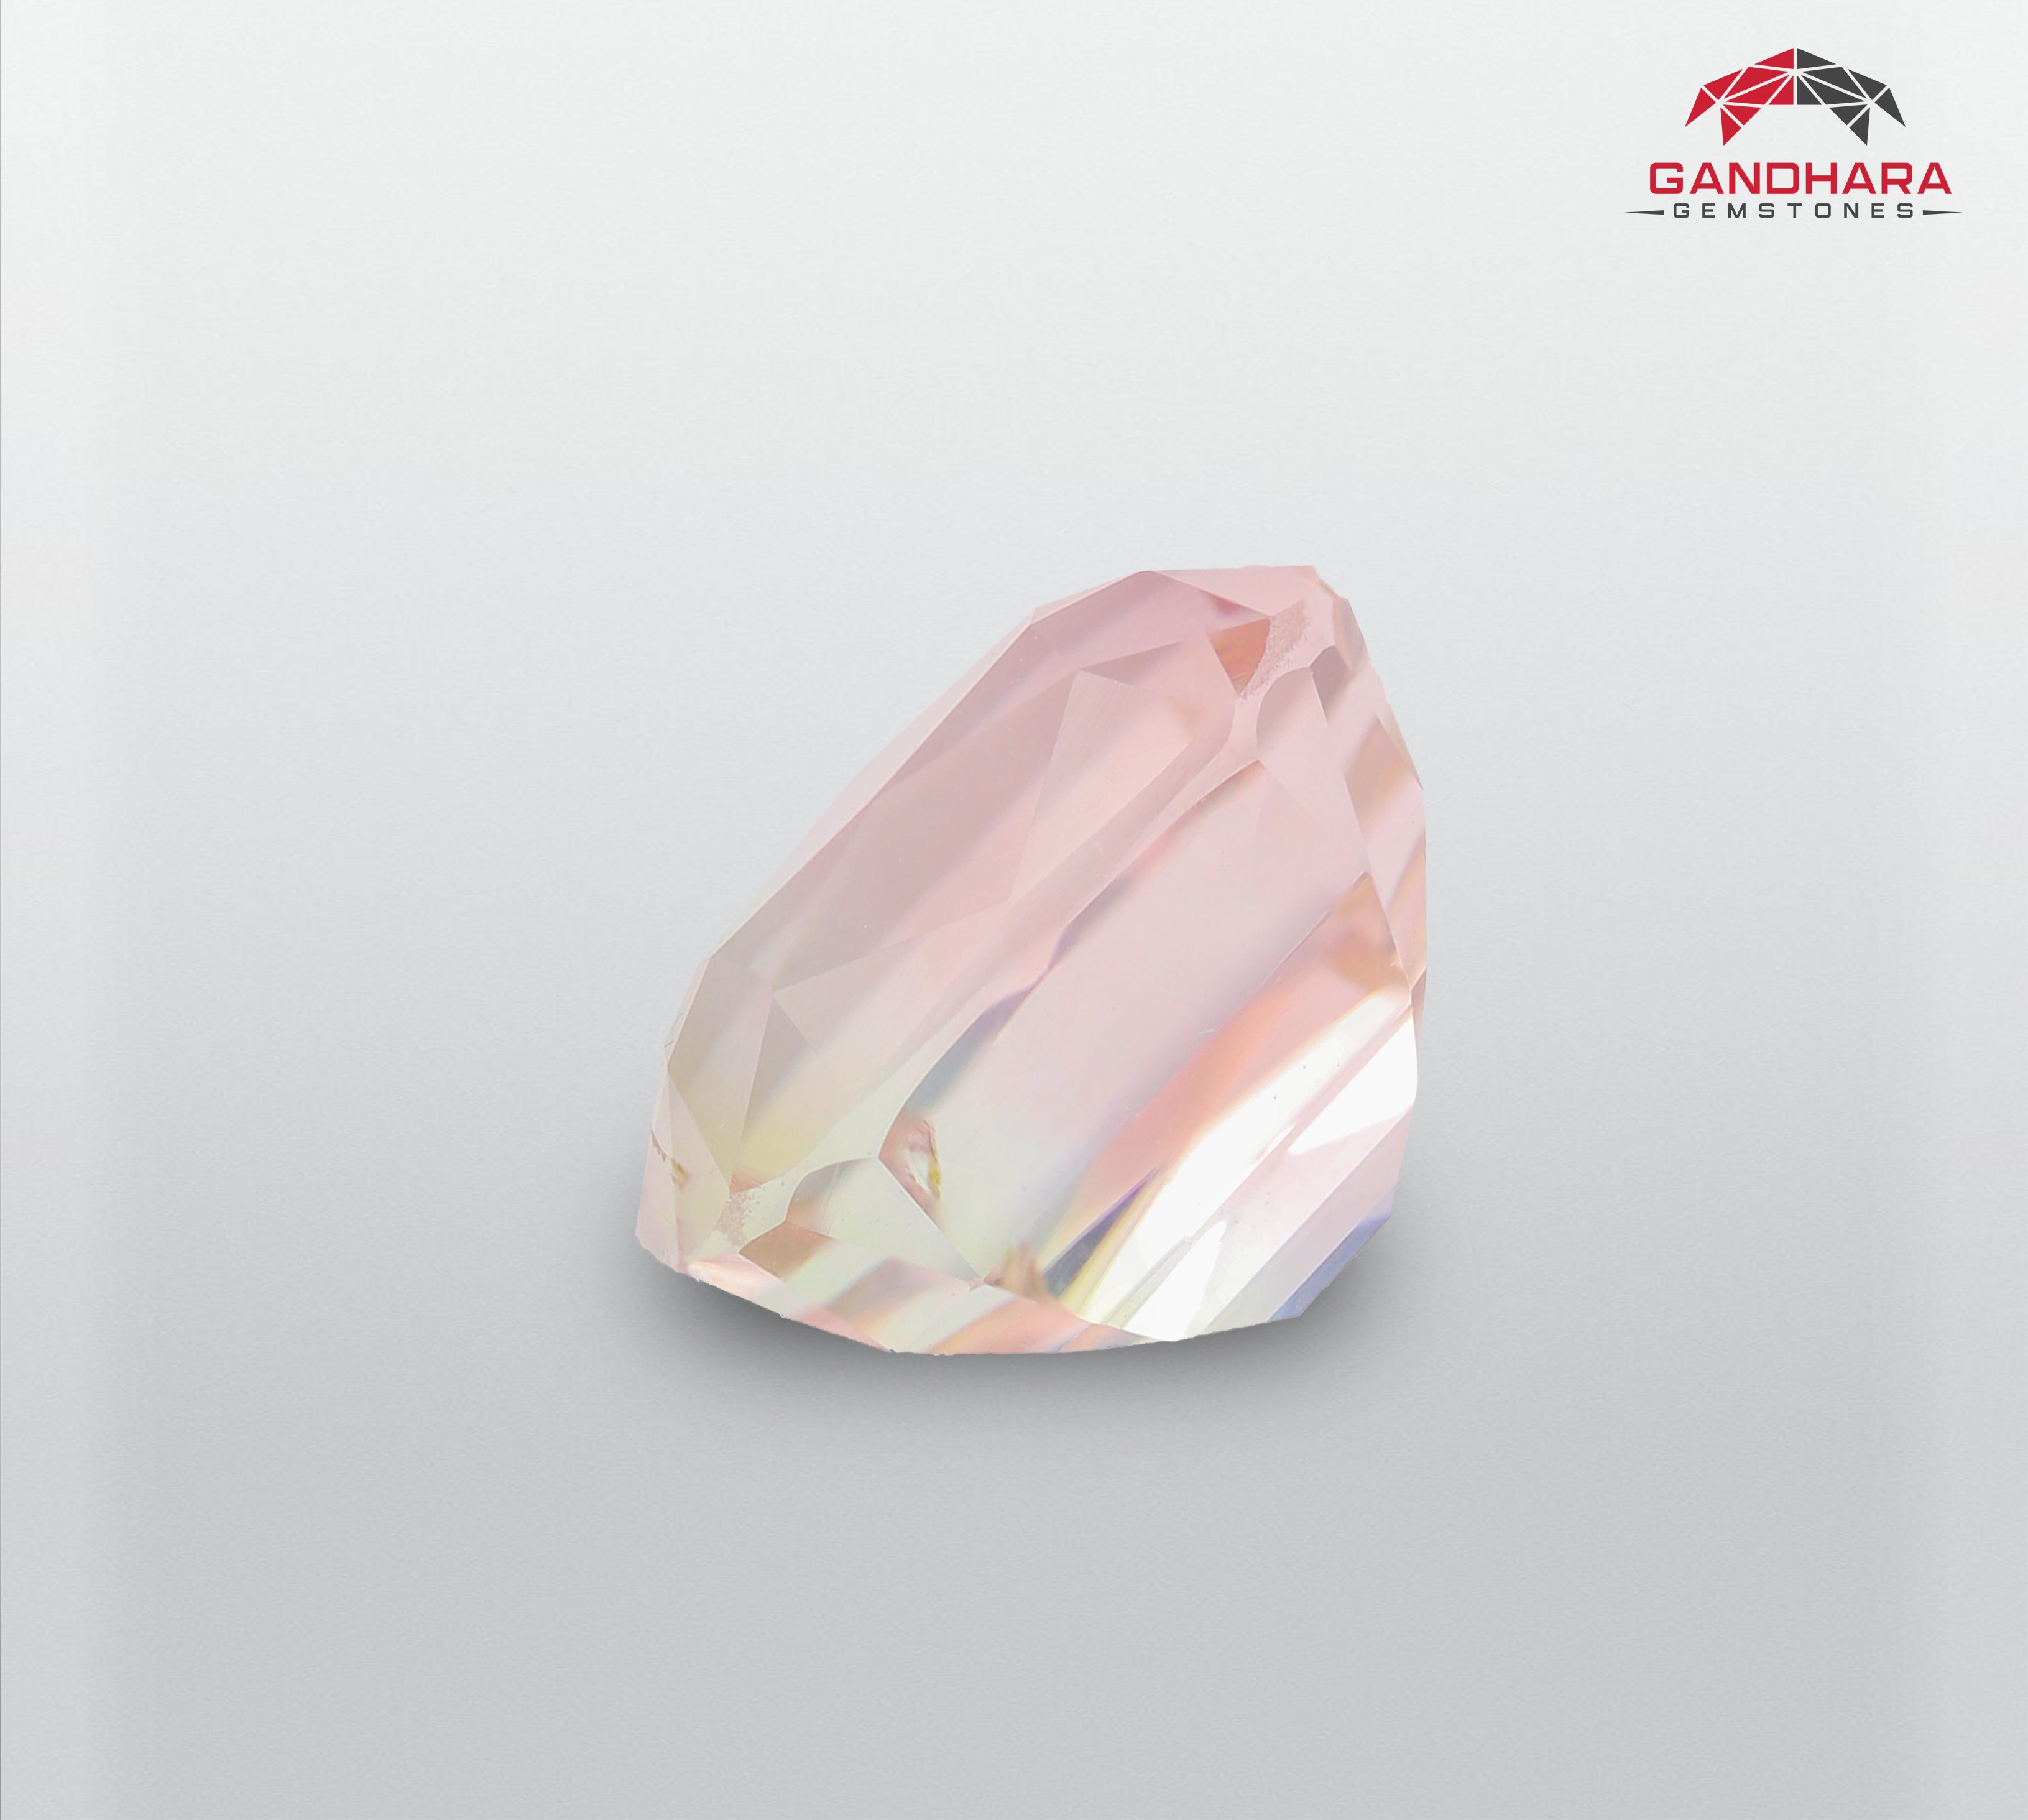 Gorgeous Light Pink Tourmaline Stone